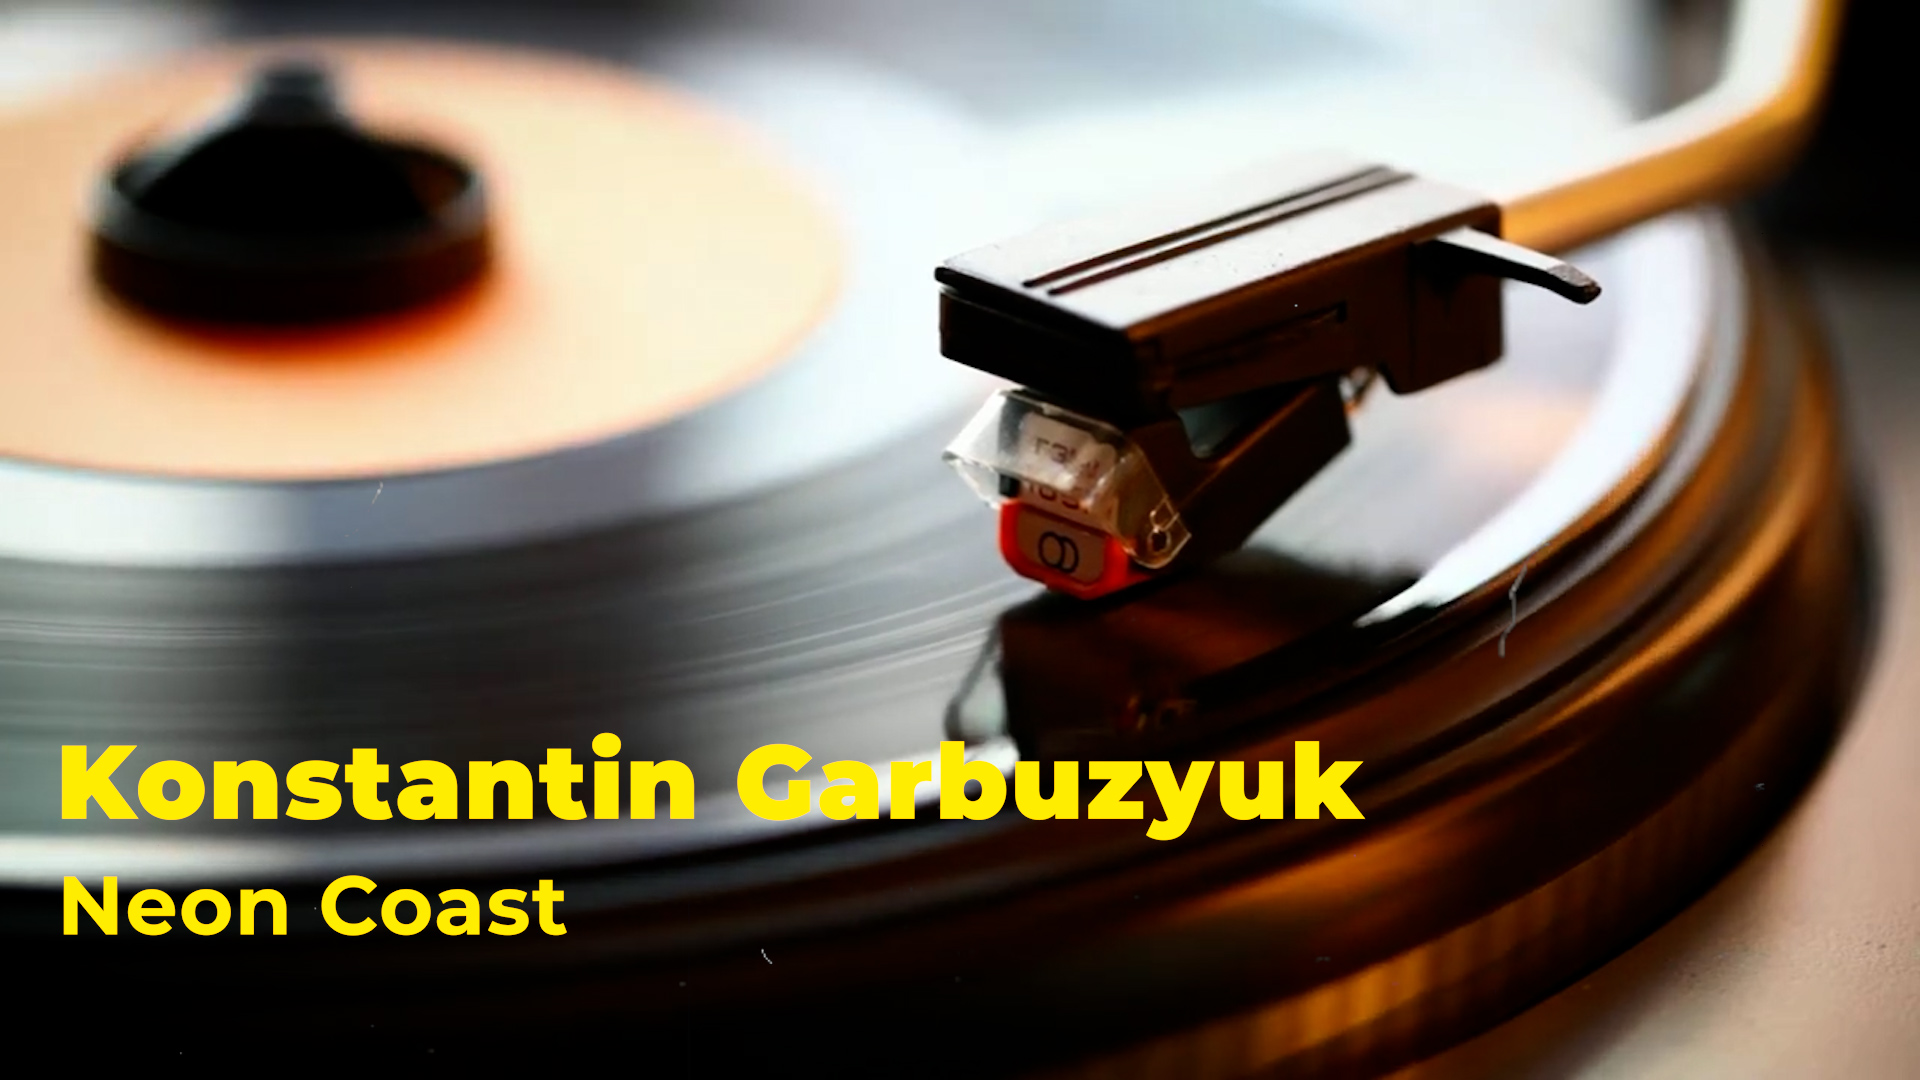 Konstantin Garbuzyuk - Neon Coast (Electronic,Pop)
Музыка без авторских прав
No Copyright Music